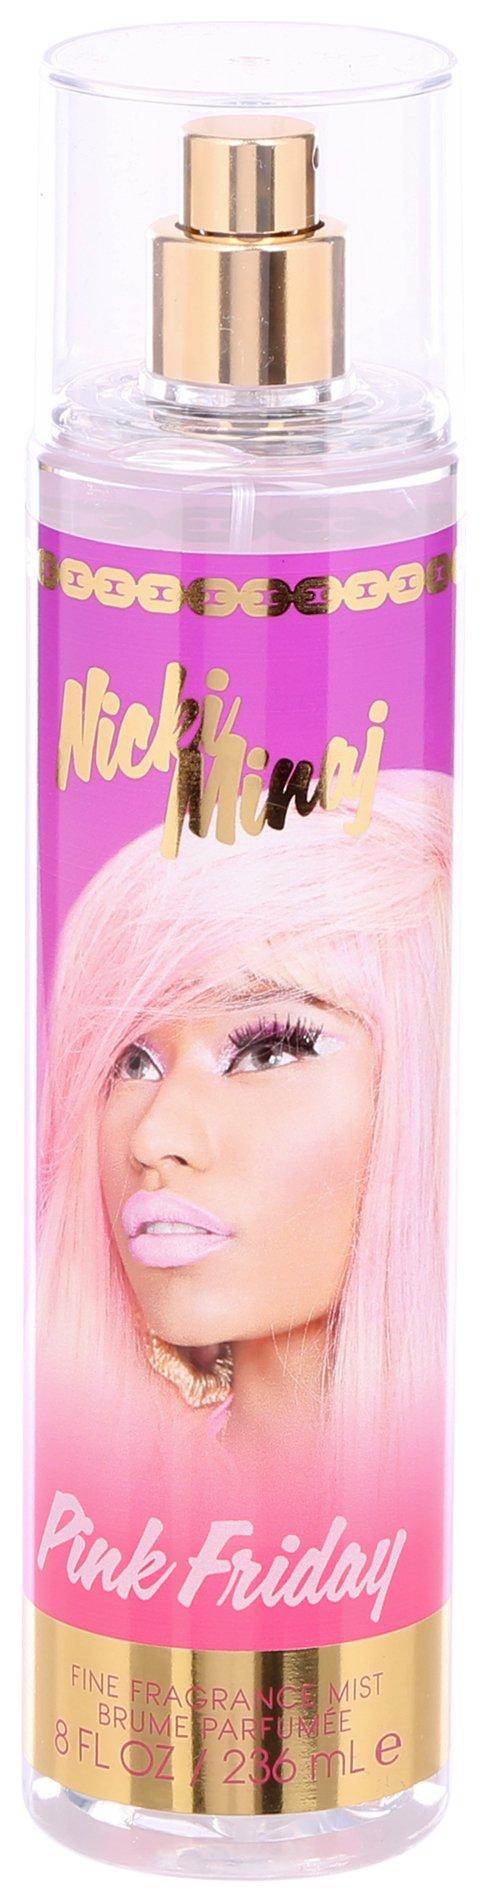 Nicki Minaj Pink Friday 8 Fl.Oz. Fine Fragrance Mist